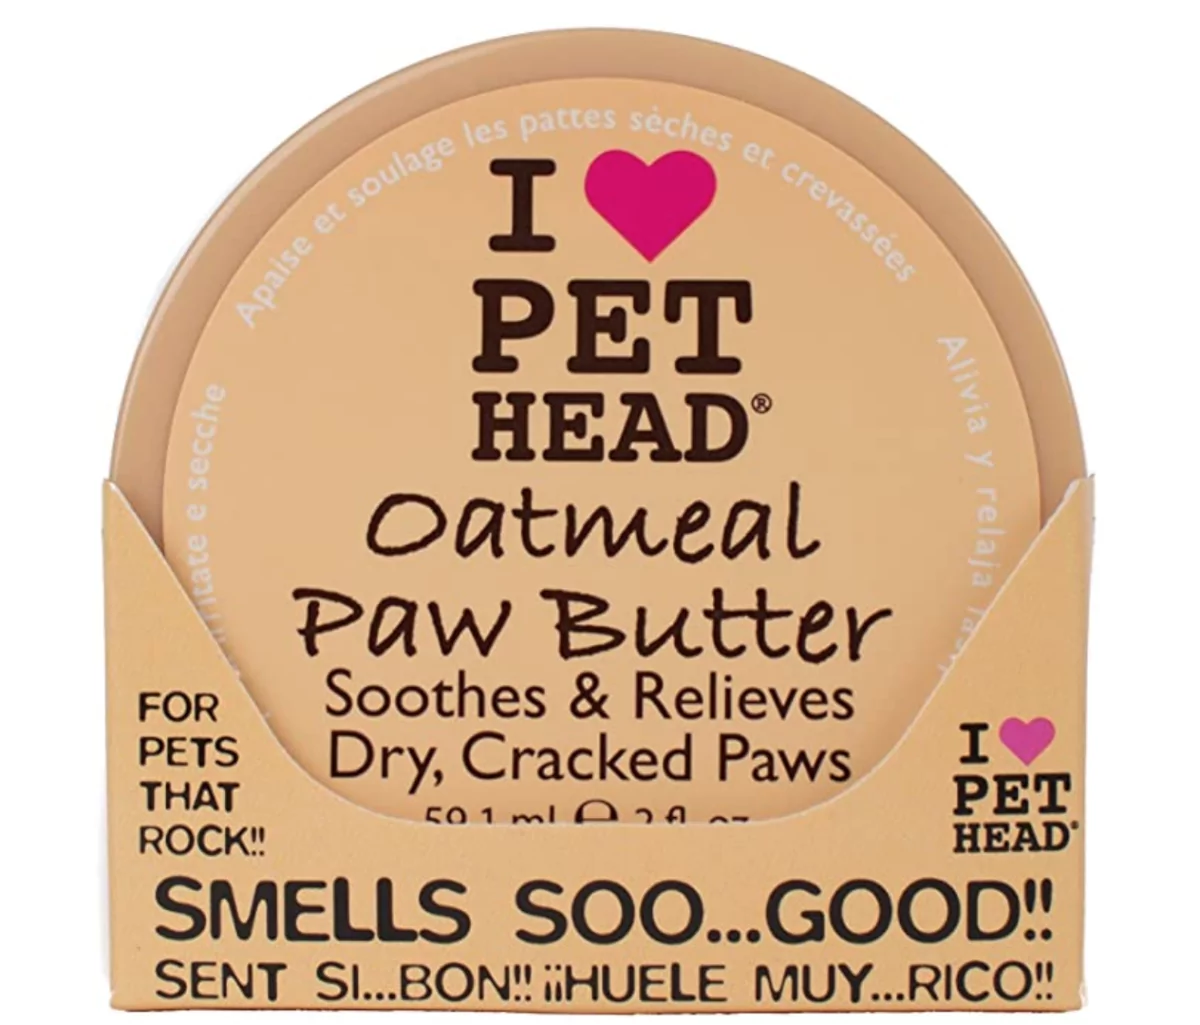 I love pet head oatmeal paw butter